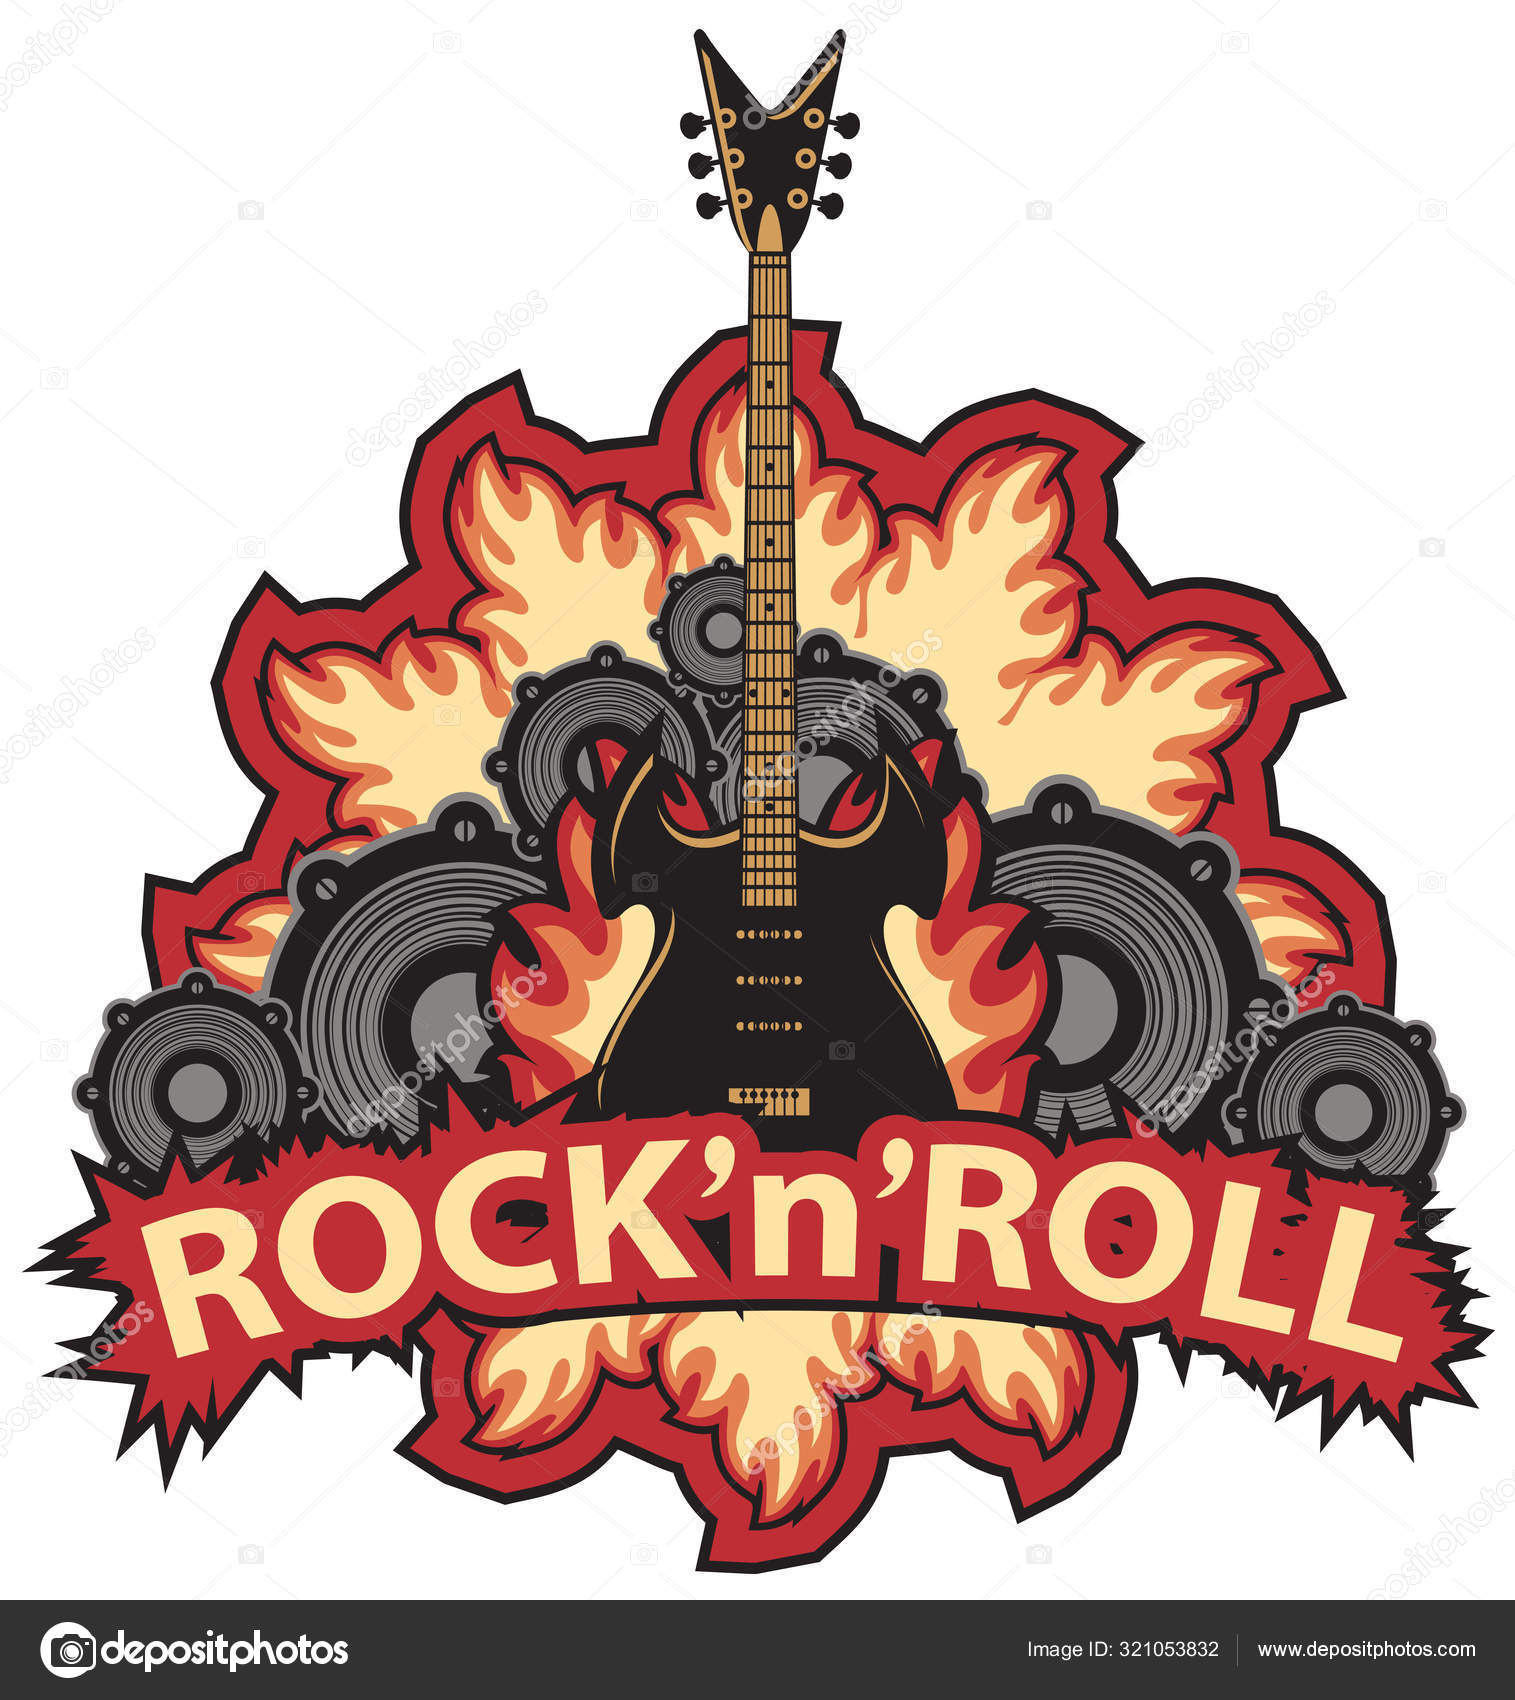 Design-Brille "Rock 'n' Roll" 